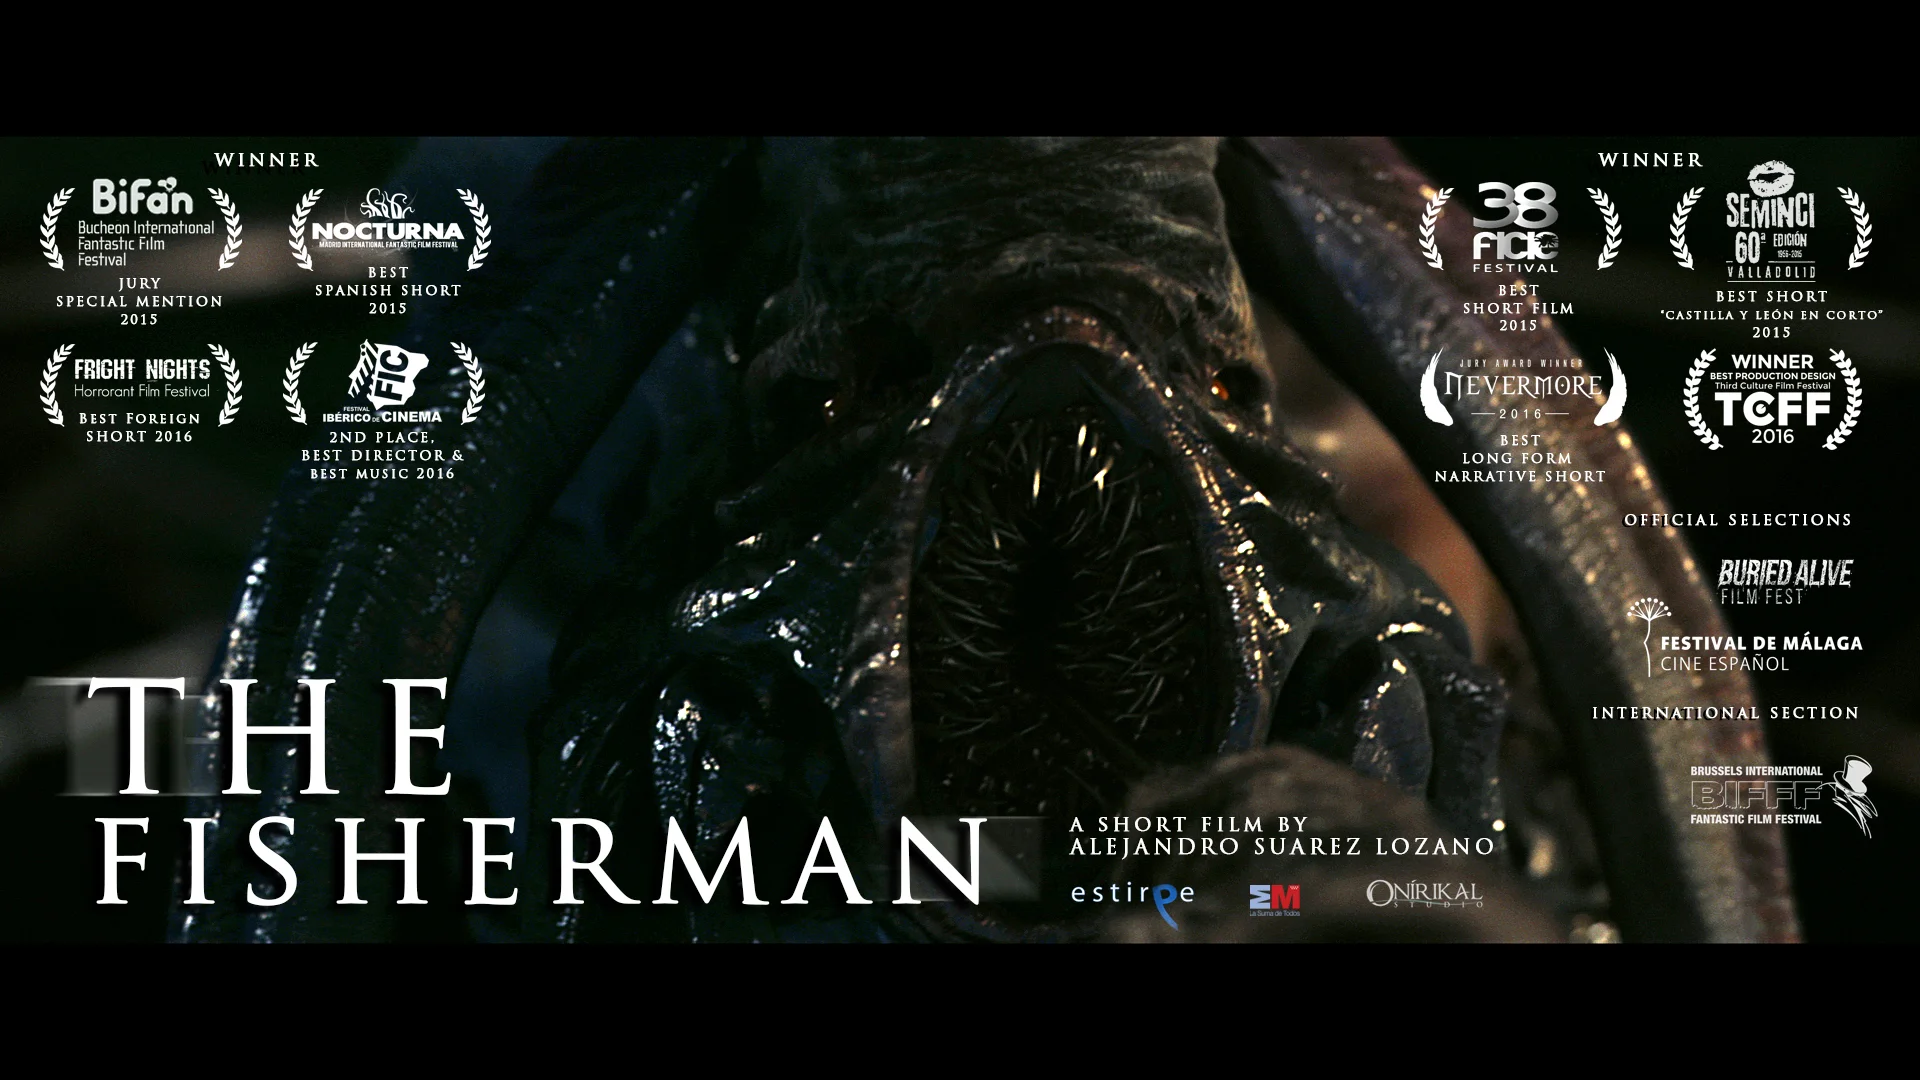 THE FISHERMAN - SciFi/Horror Short Film